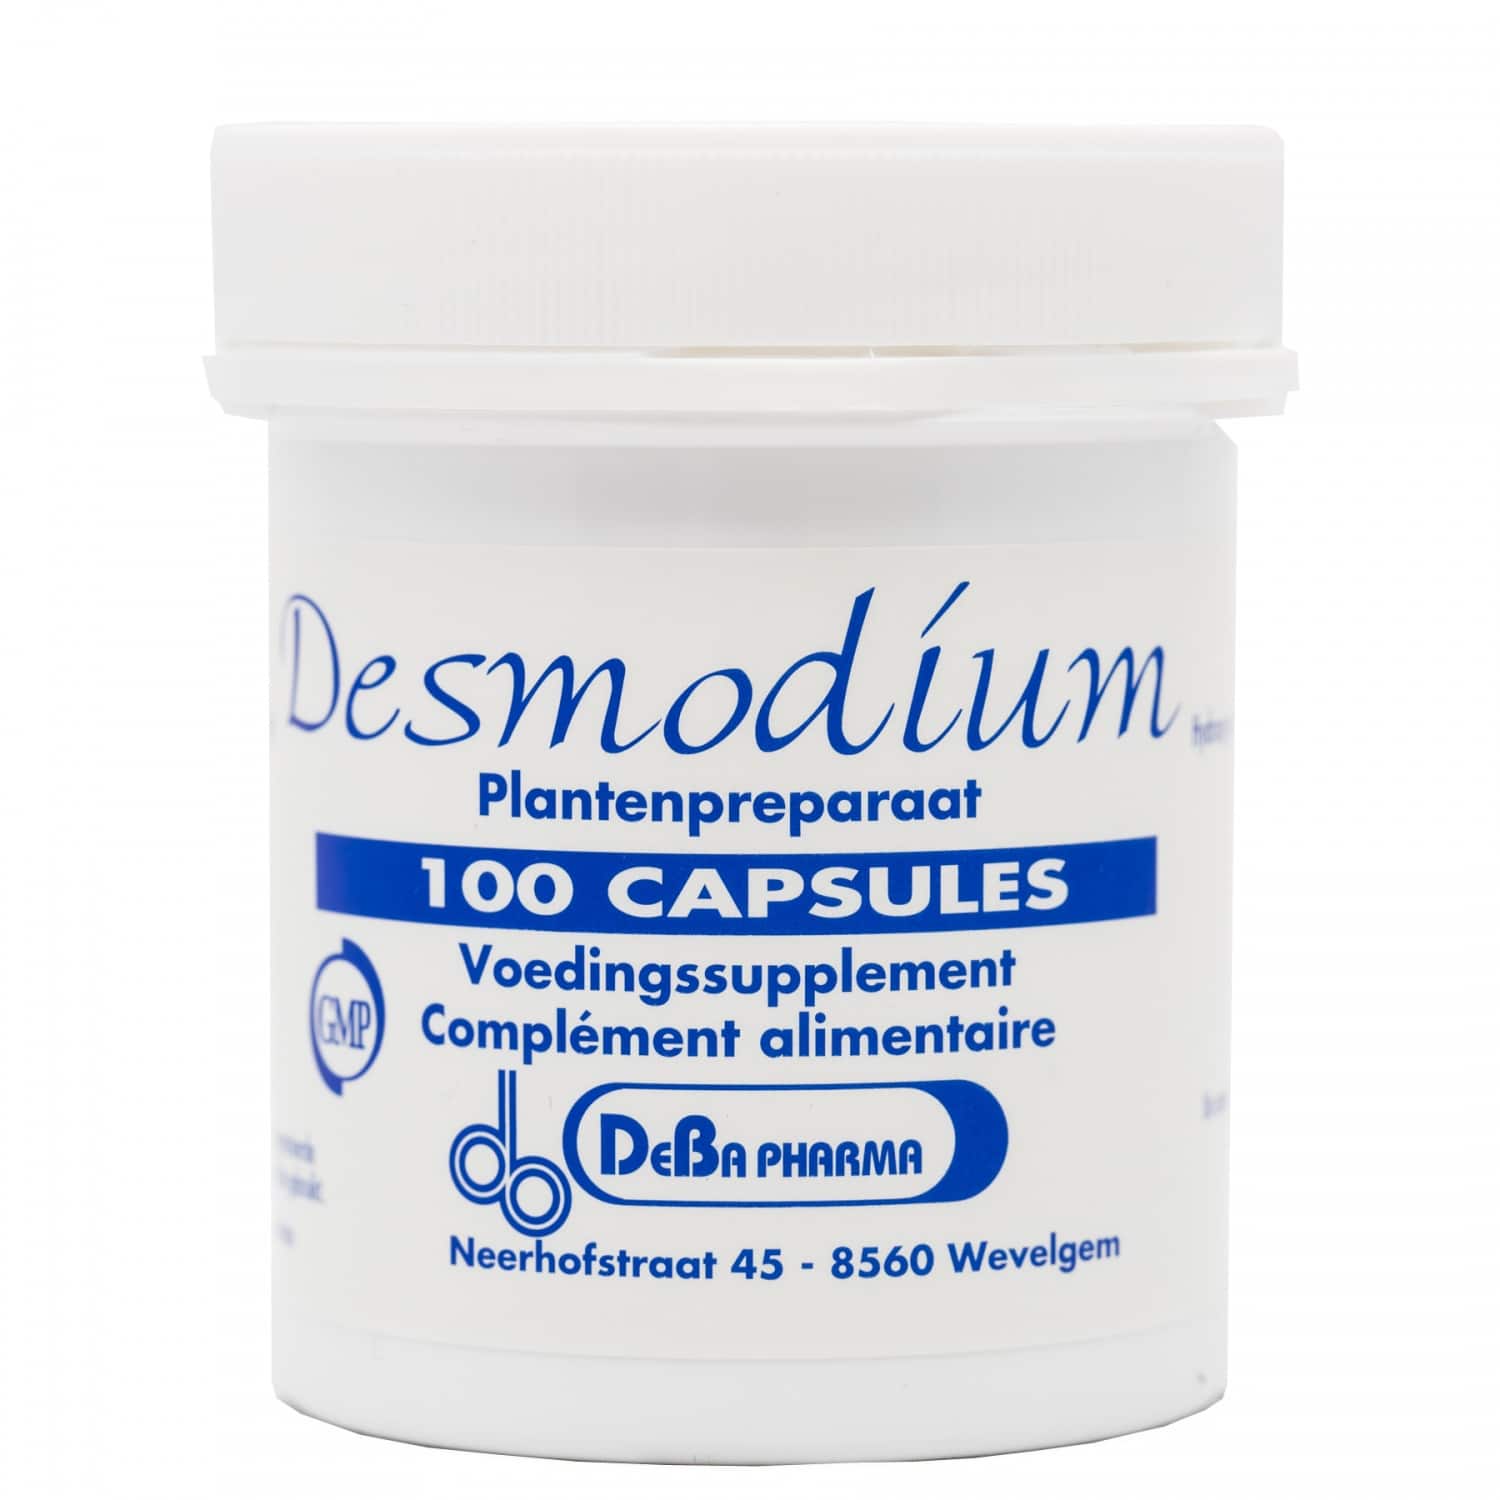 Deba Desmodium Ascendens 200 mg